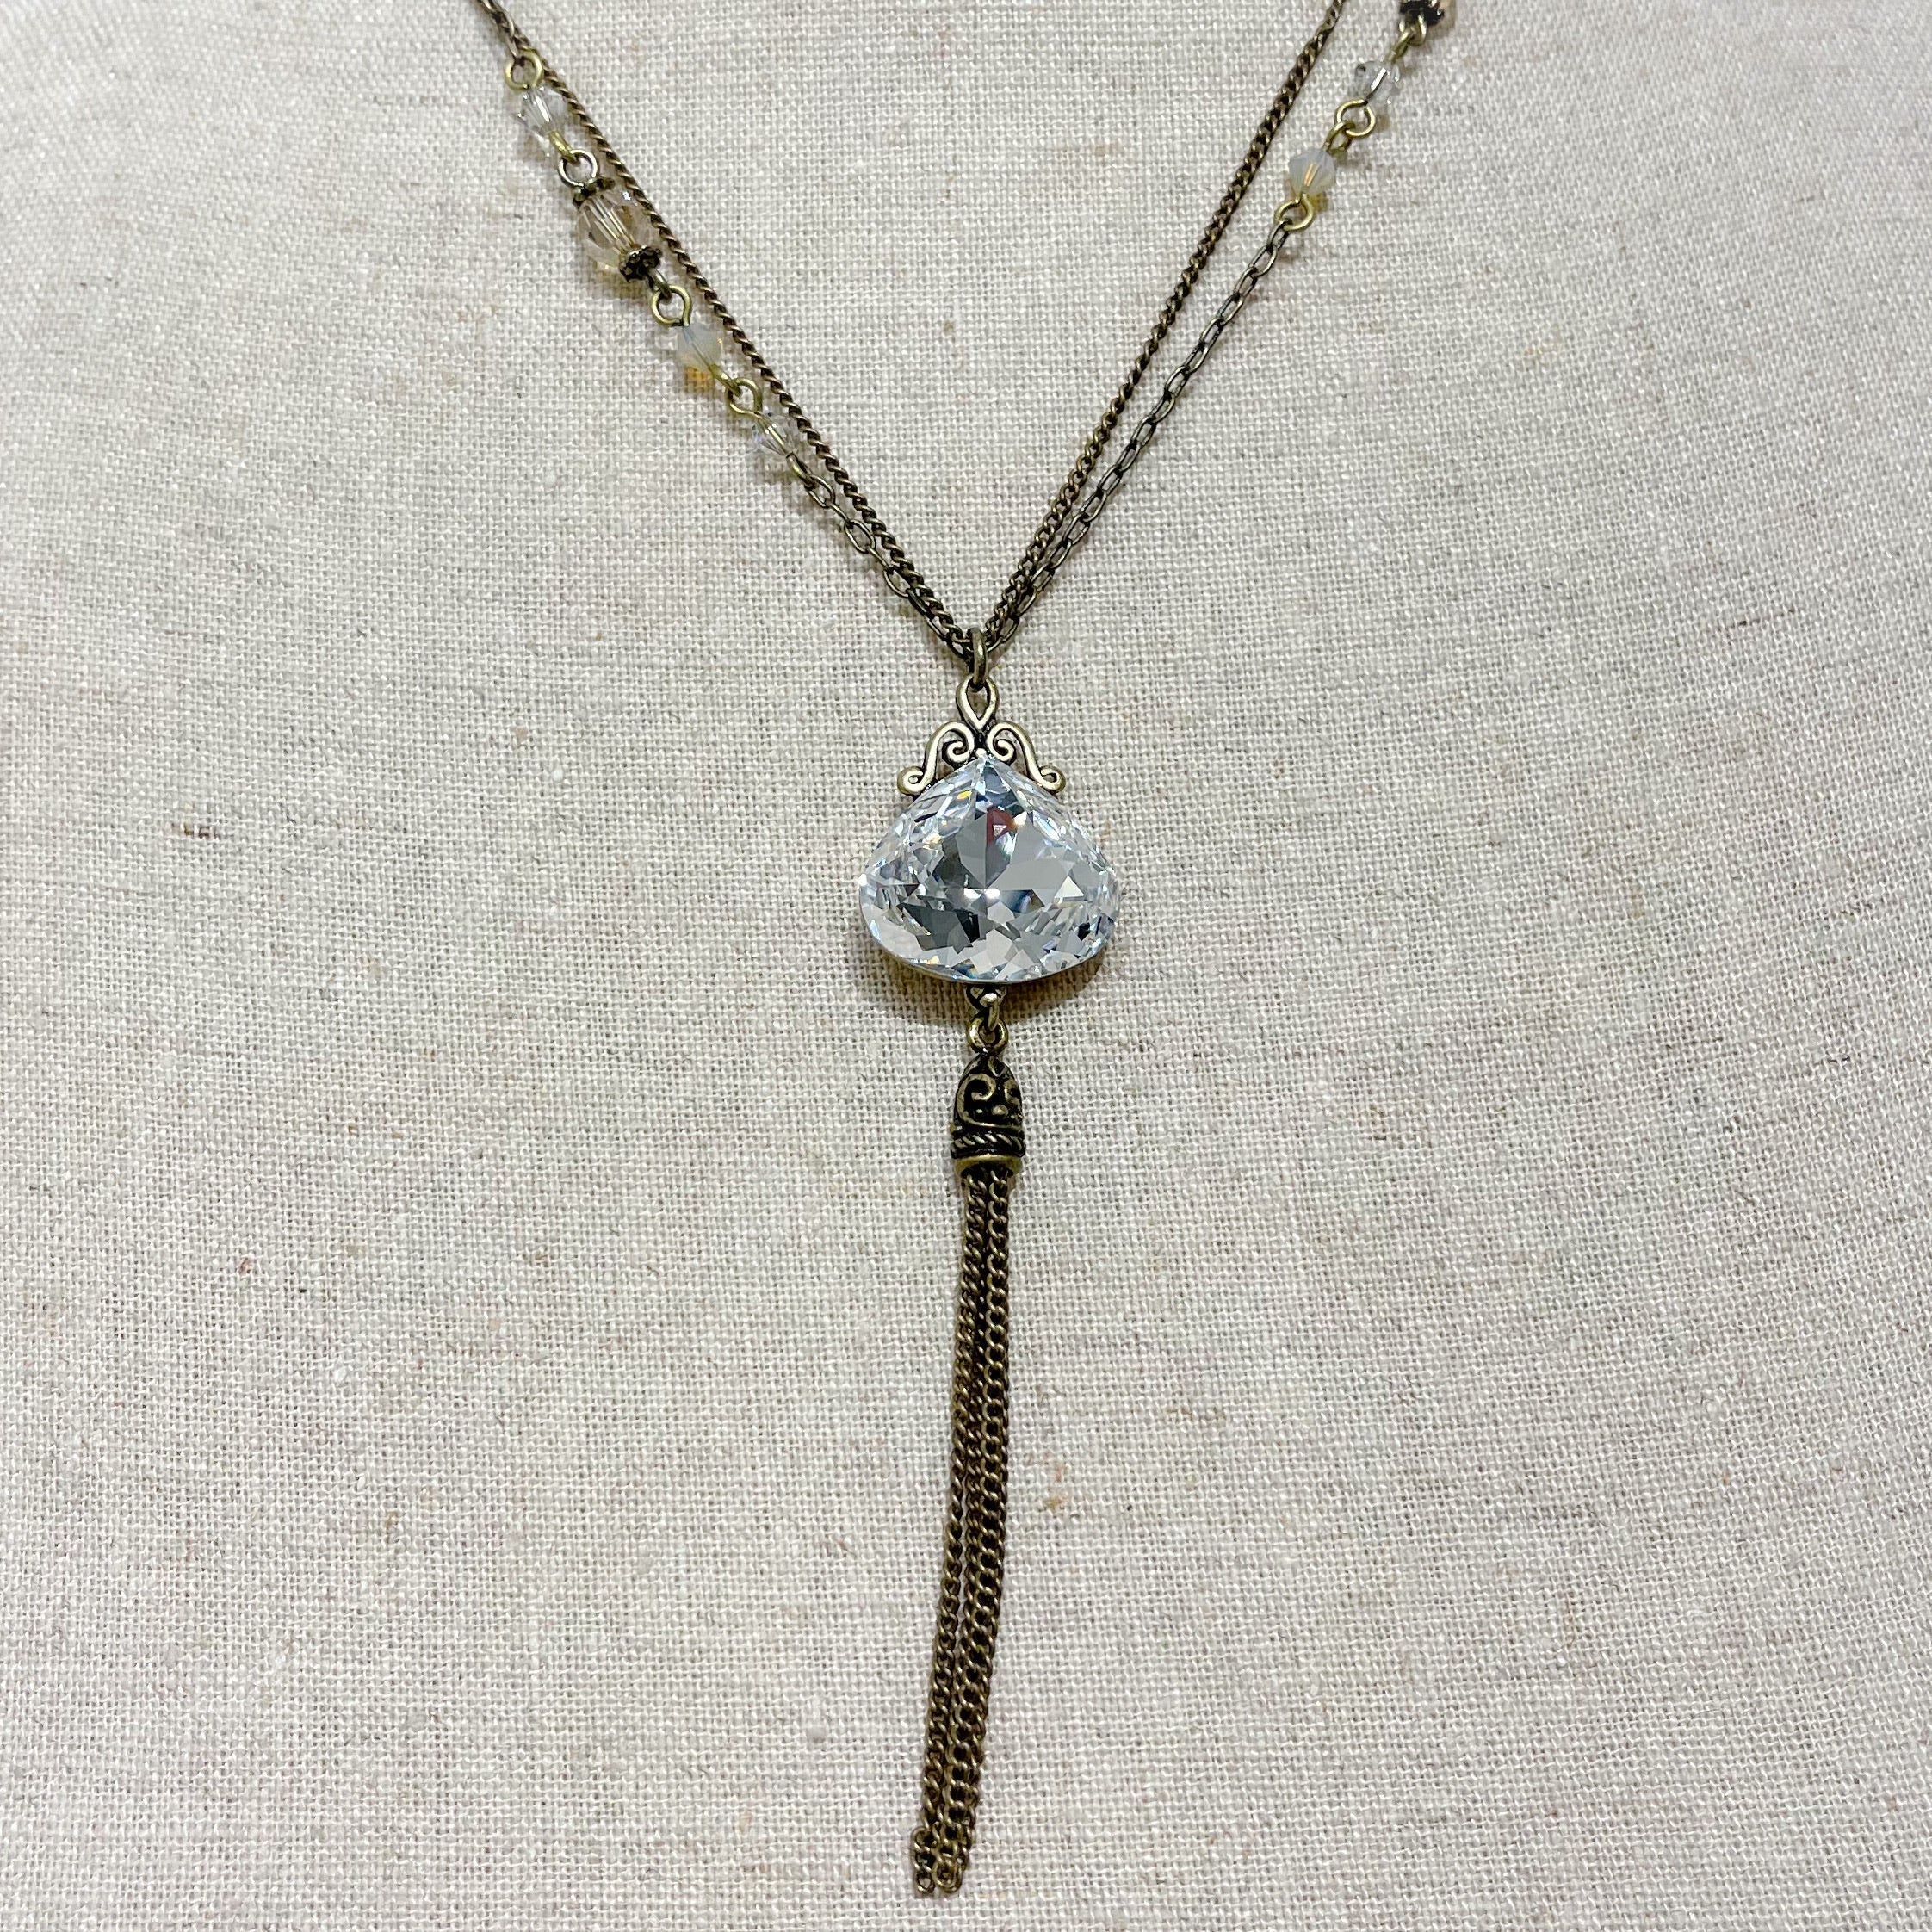 Swarovski Crystal Necklace - The Nancy Smillie Shop - Art, Jewellery & Designer Gifts Glasgow